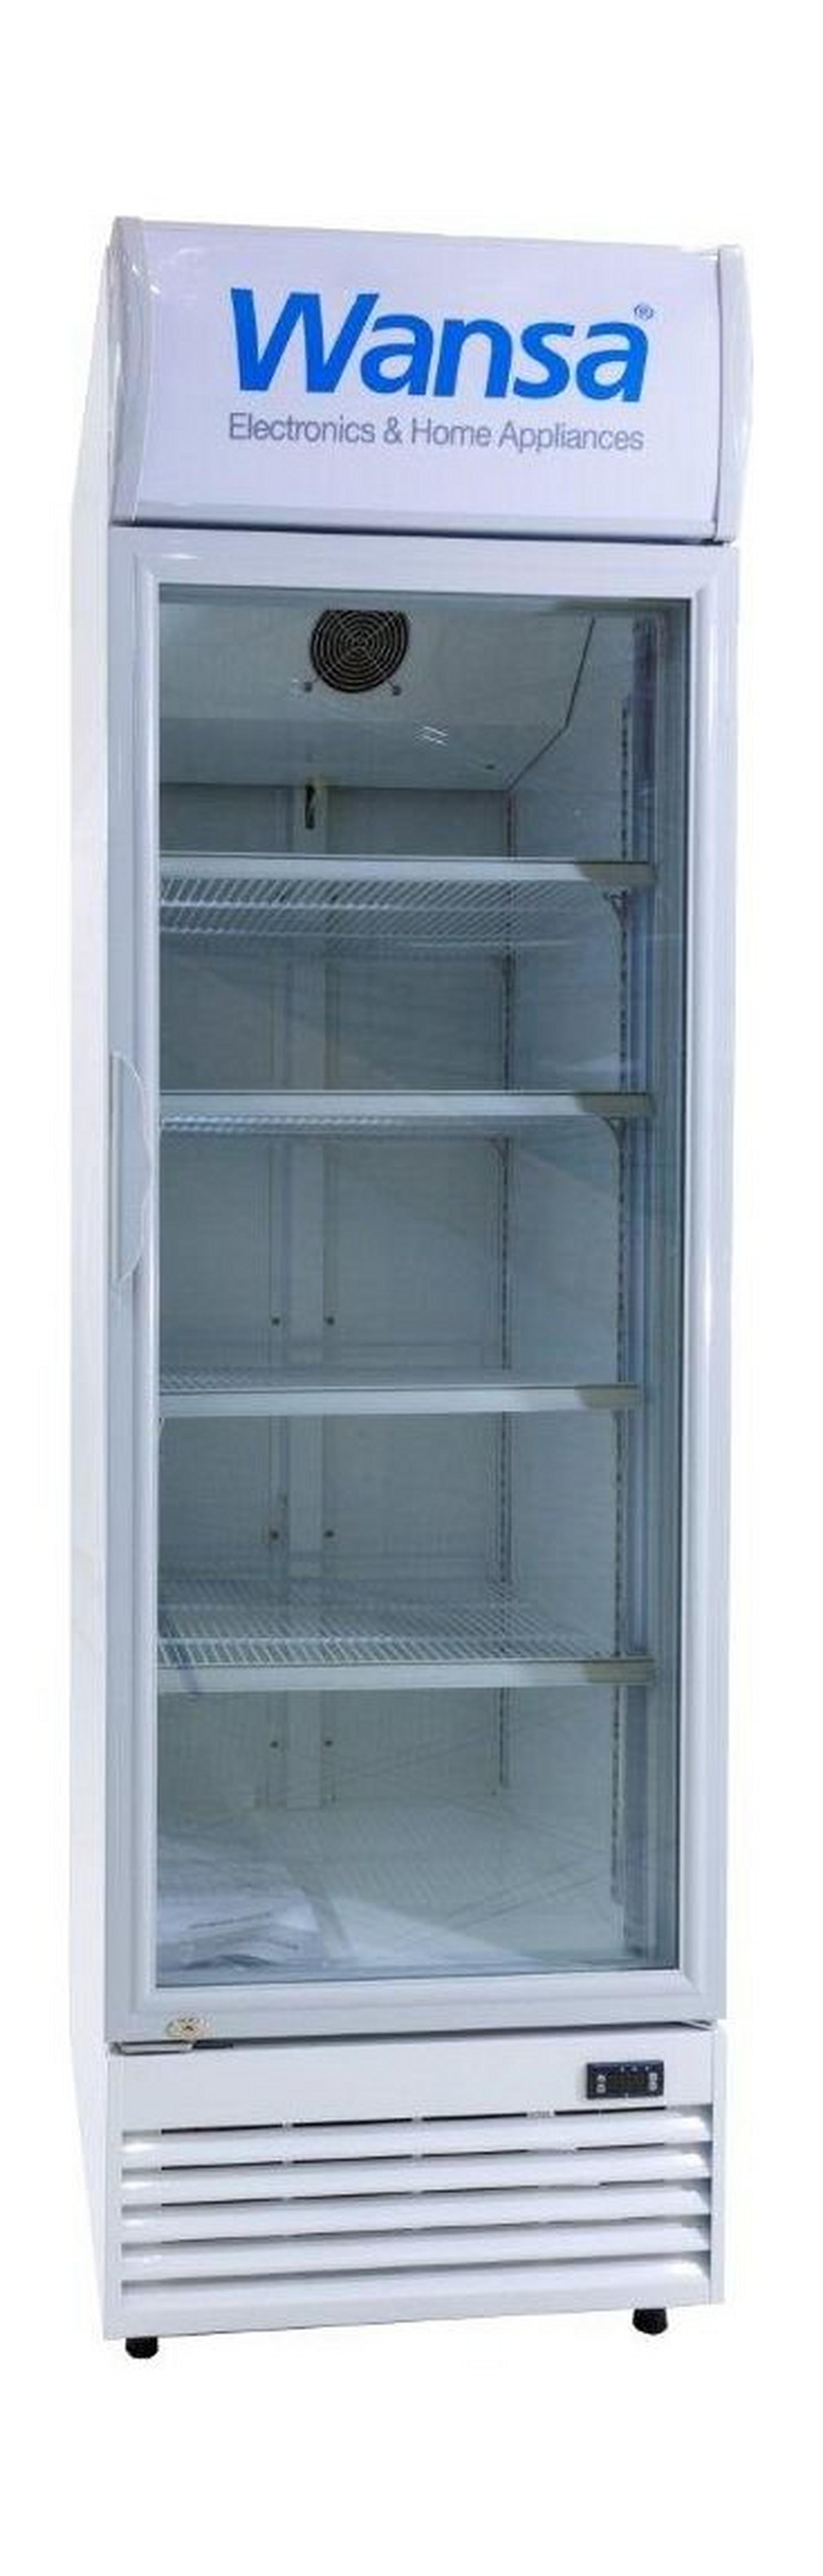 Wansa 15 Cft Window Refrigerator (WUSC-430-NFWT) – White